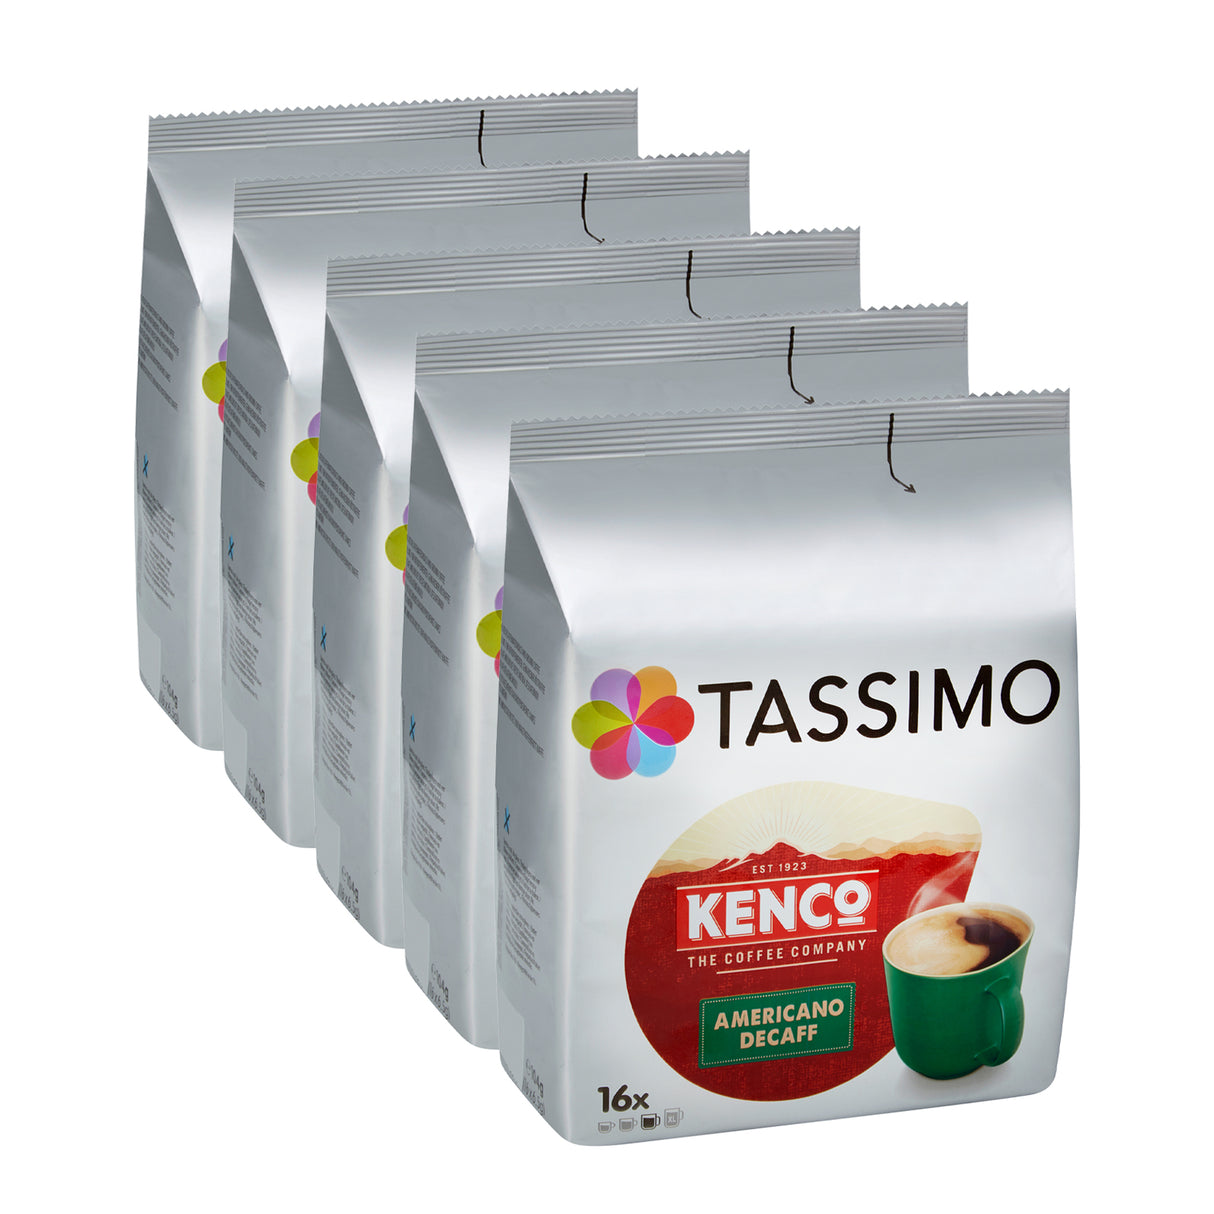 Tassimo Kenco Americano Decaff 5packs